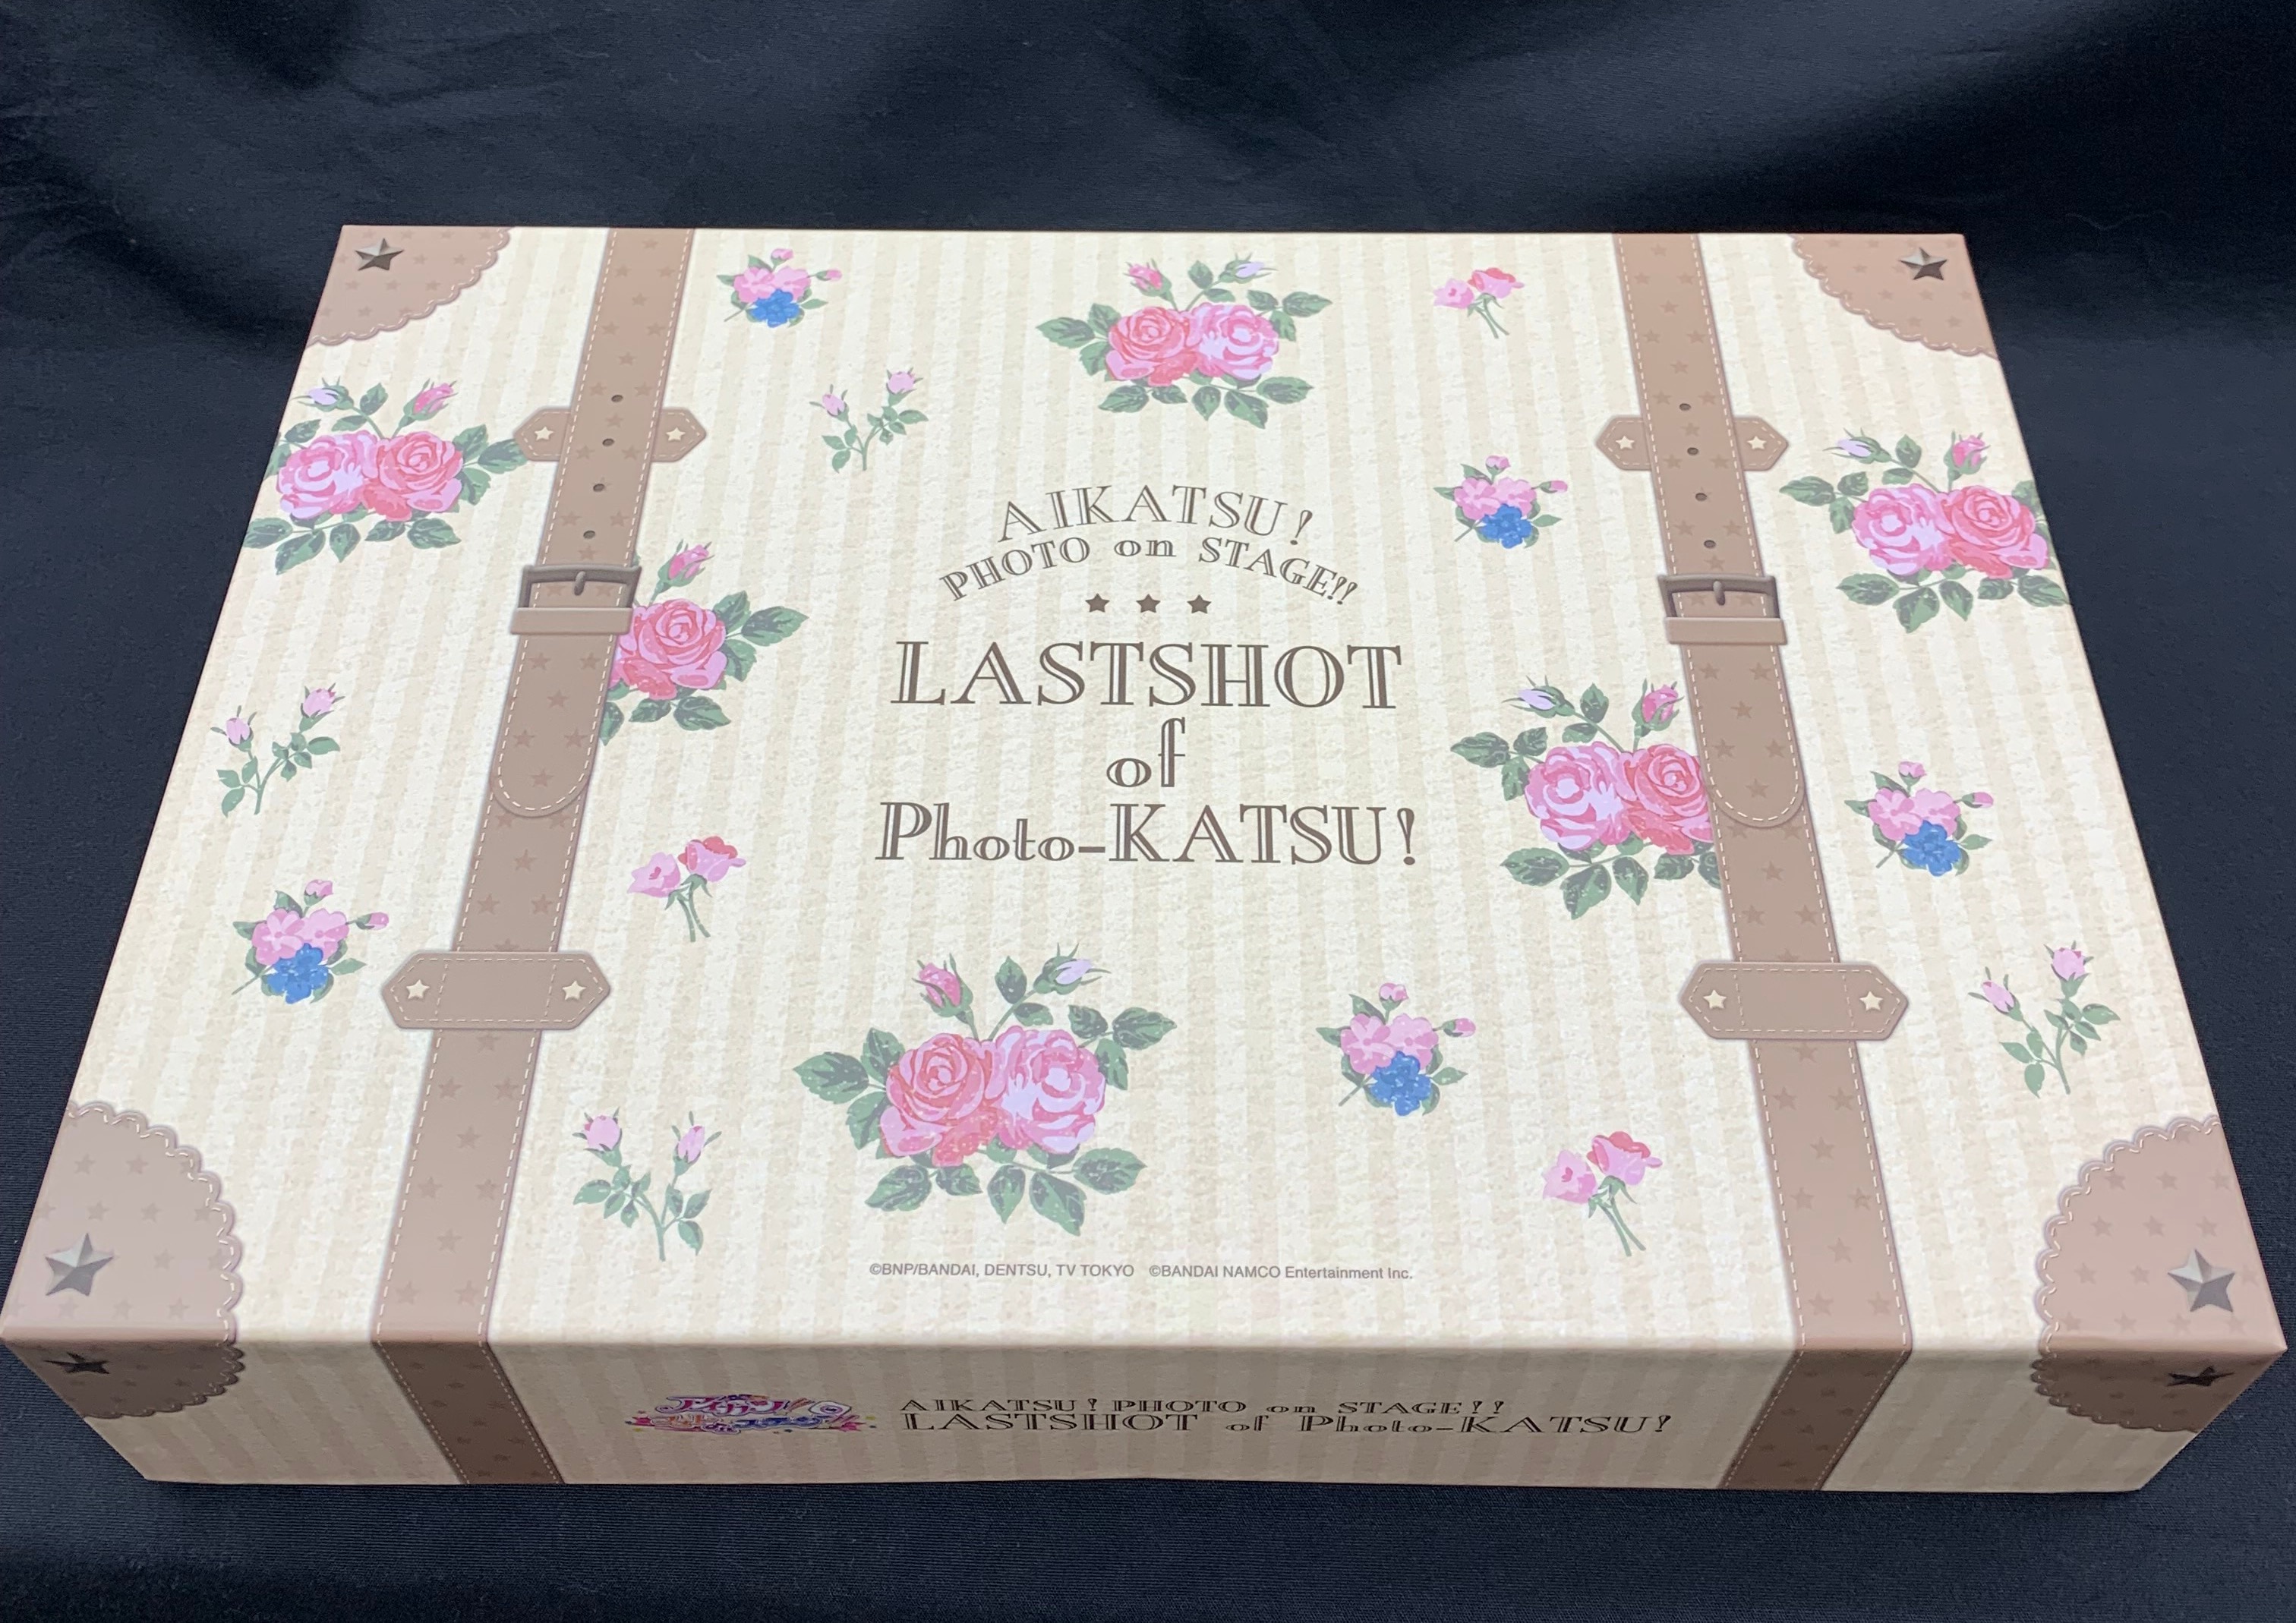 LASTSHOT of Photo-KATSU！-